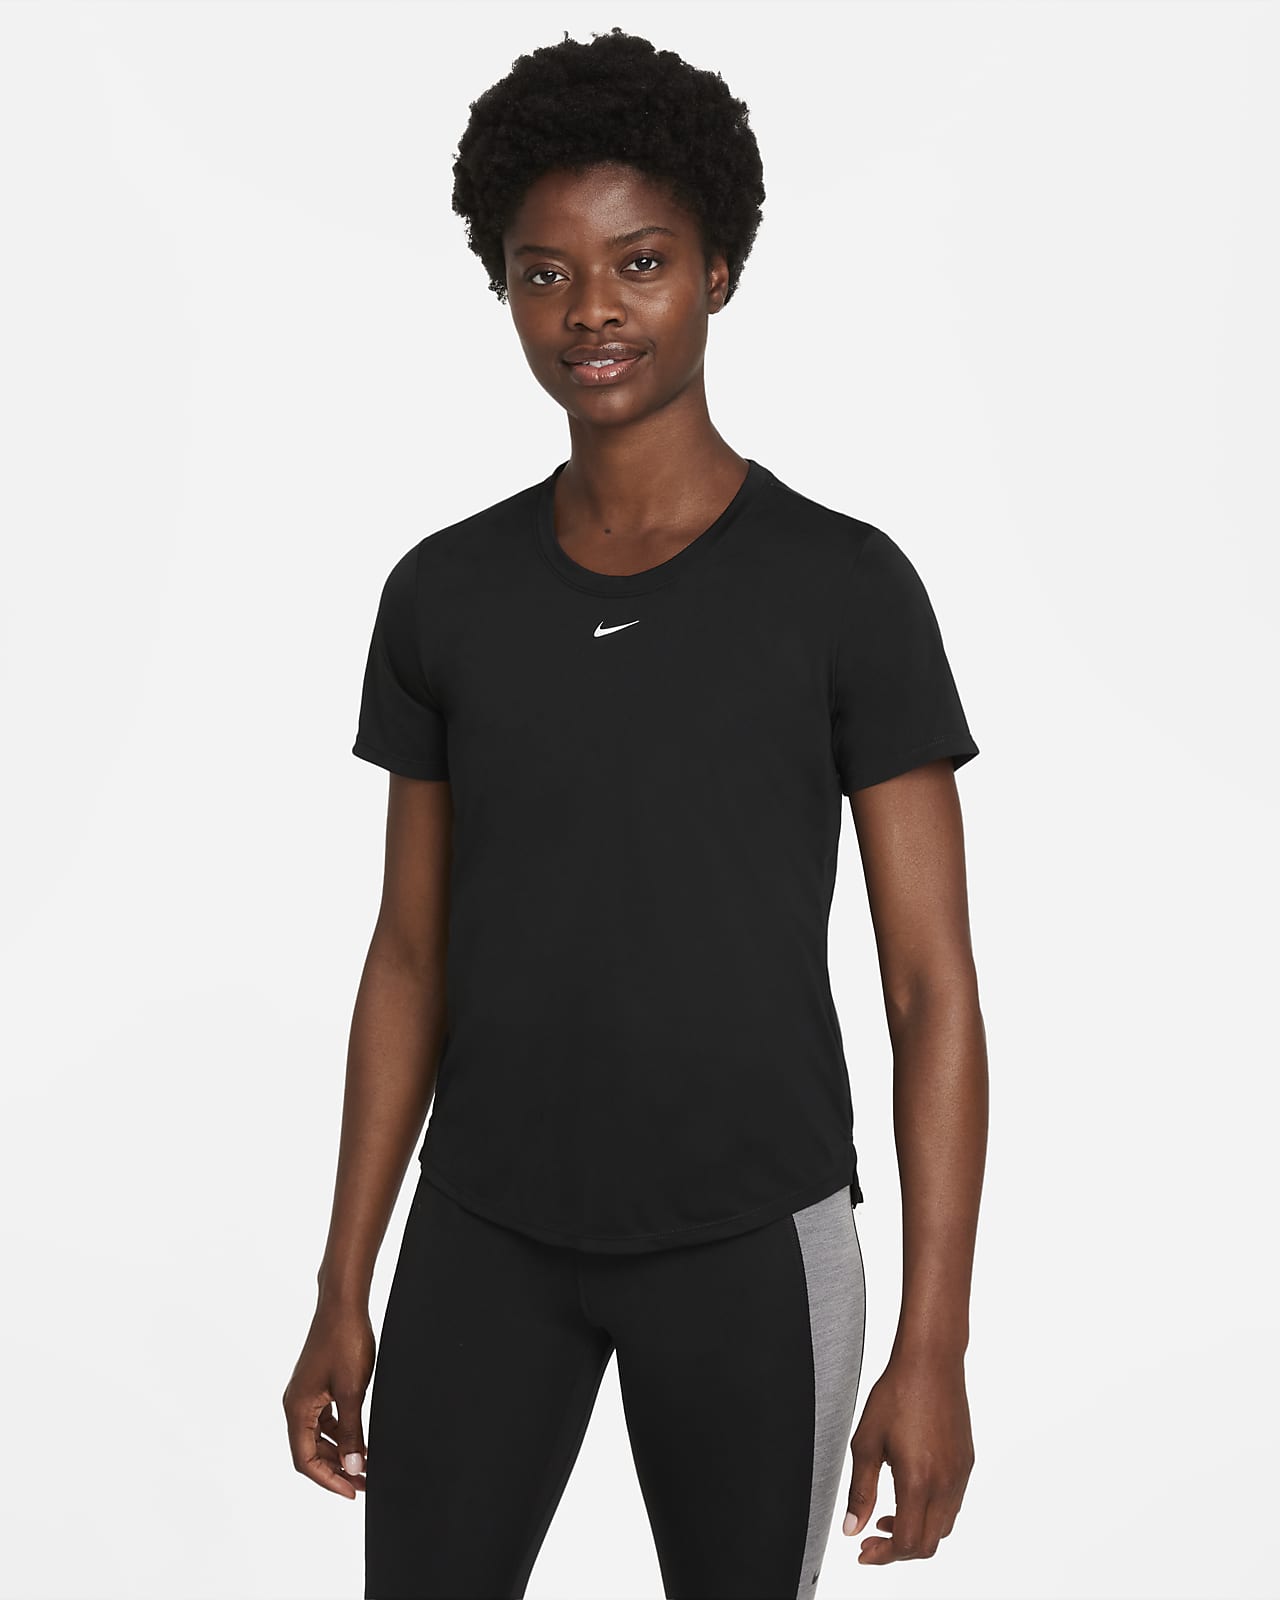 Nike Dri-FIT One normál fazonú, rövid ujjú női póló